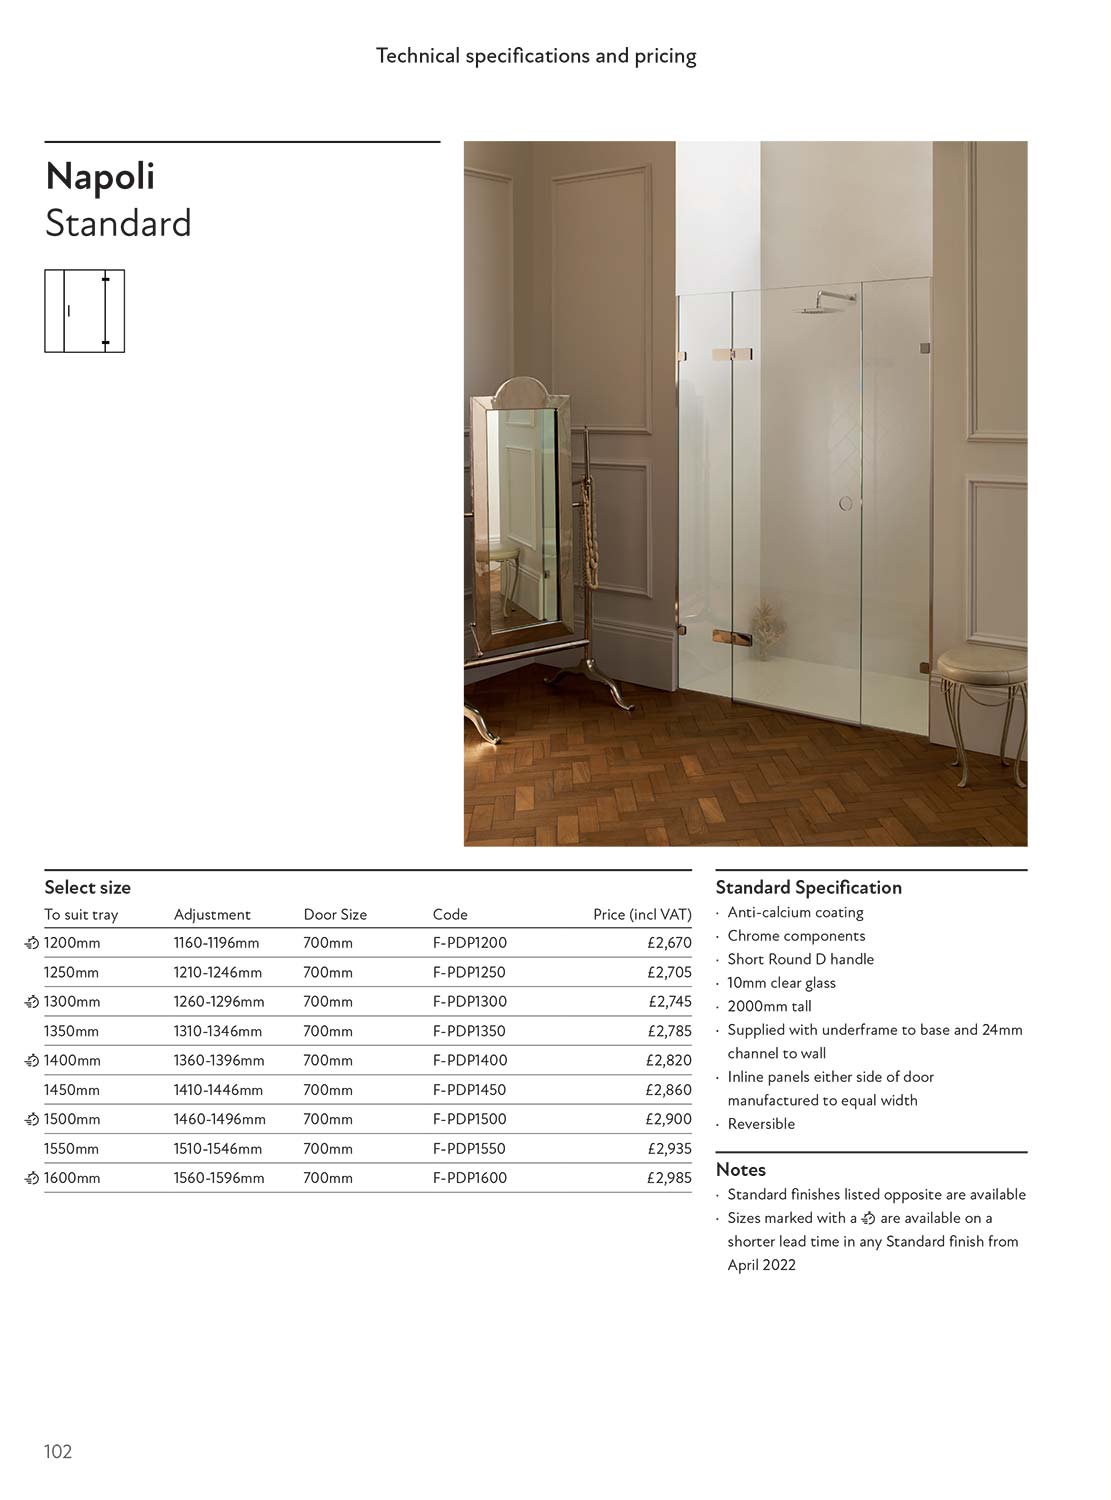 Napoli Standard specification